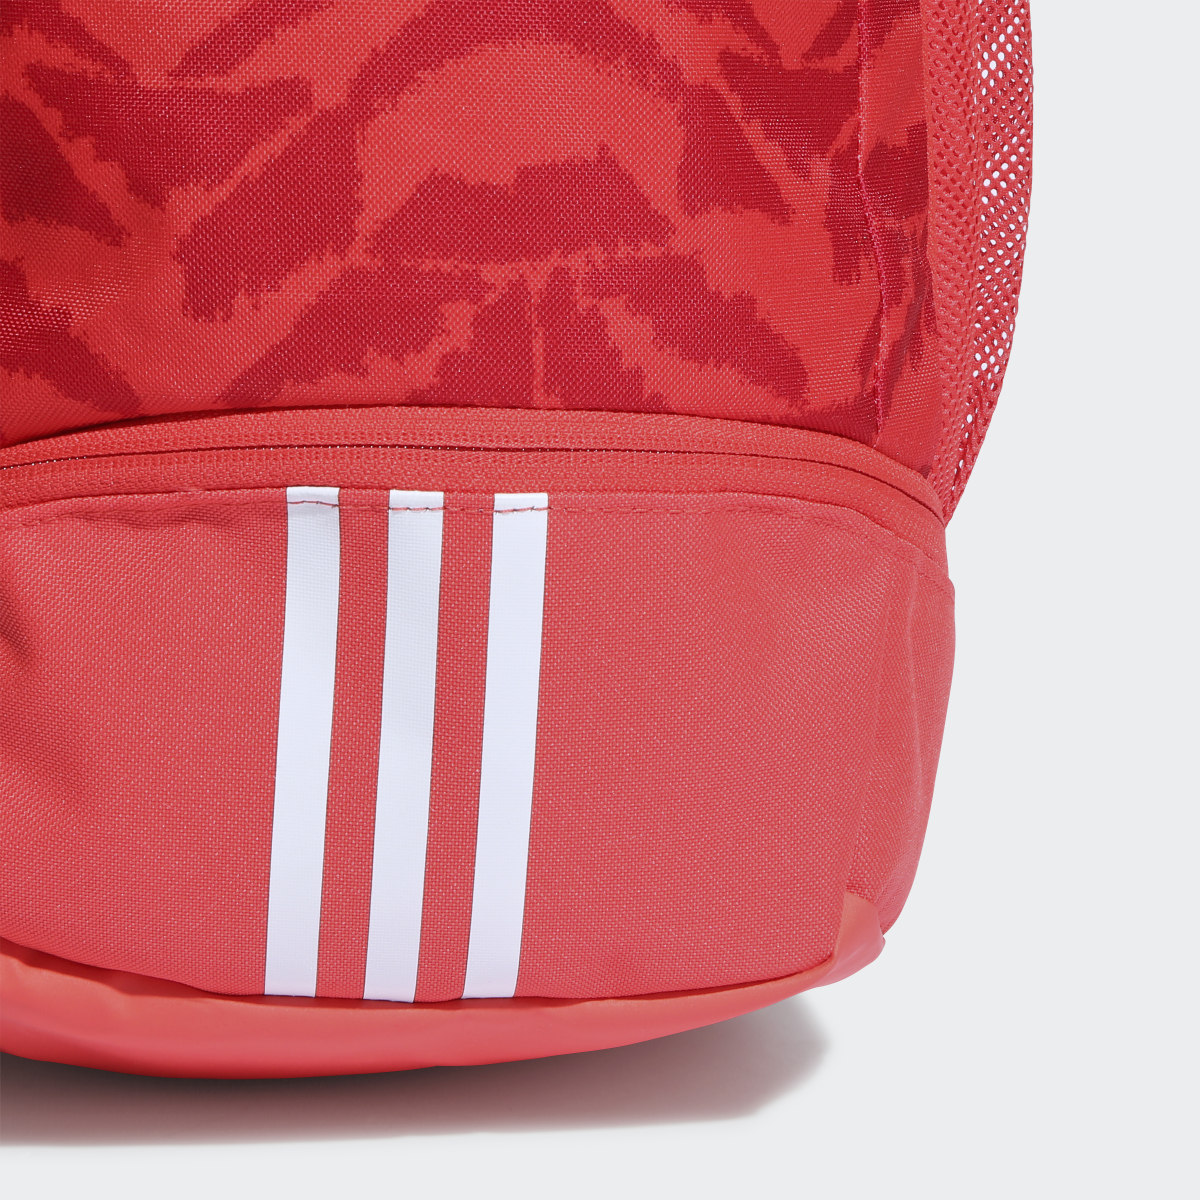 Adidas Football Backpack. 7